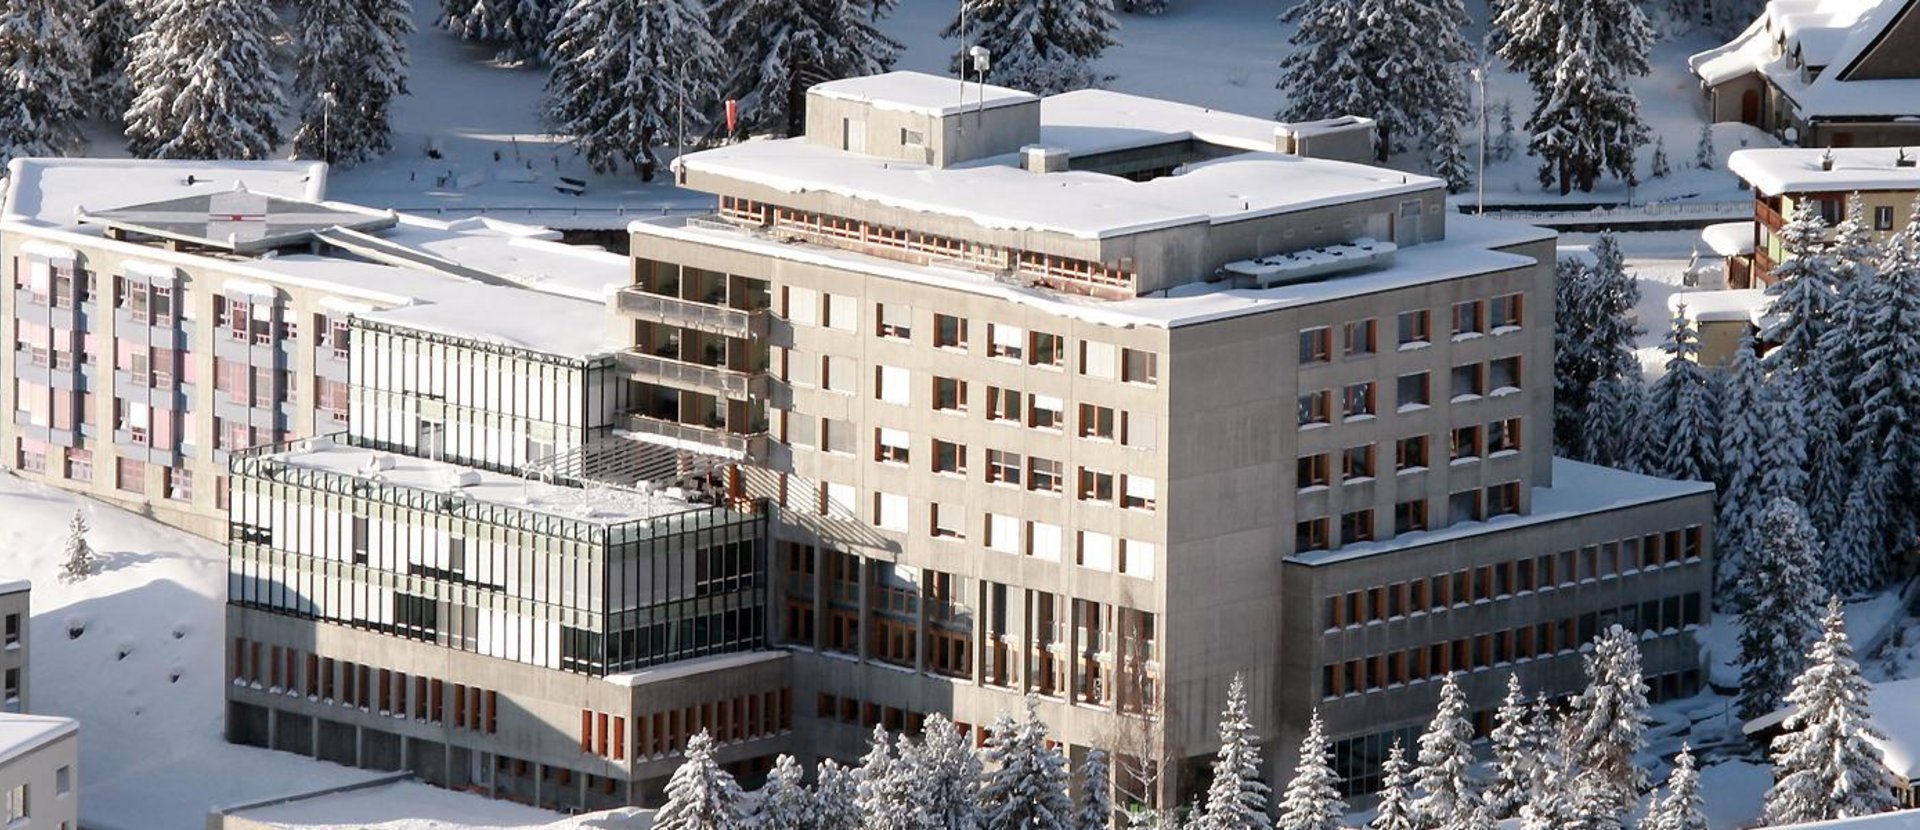 Spital Davos & Kliniken